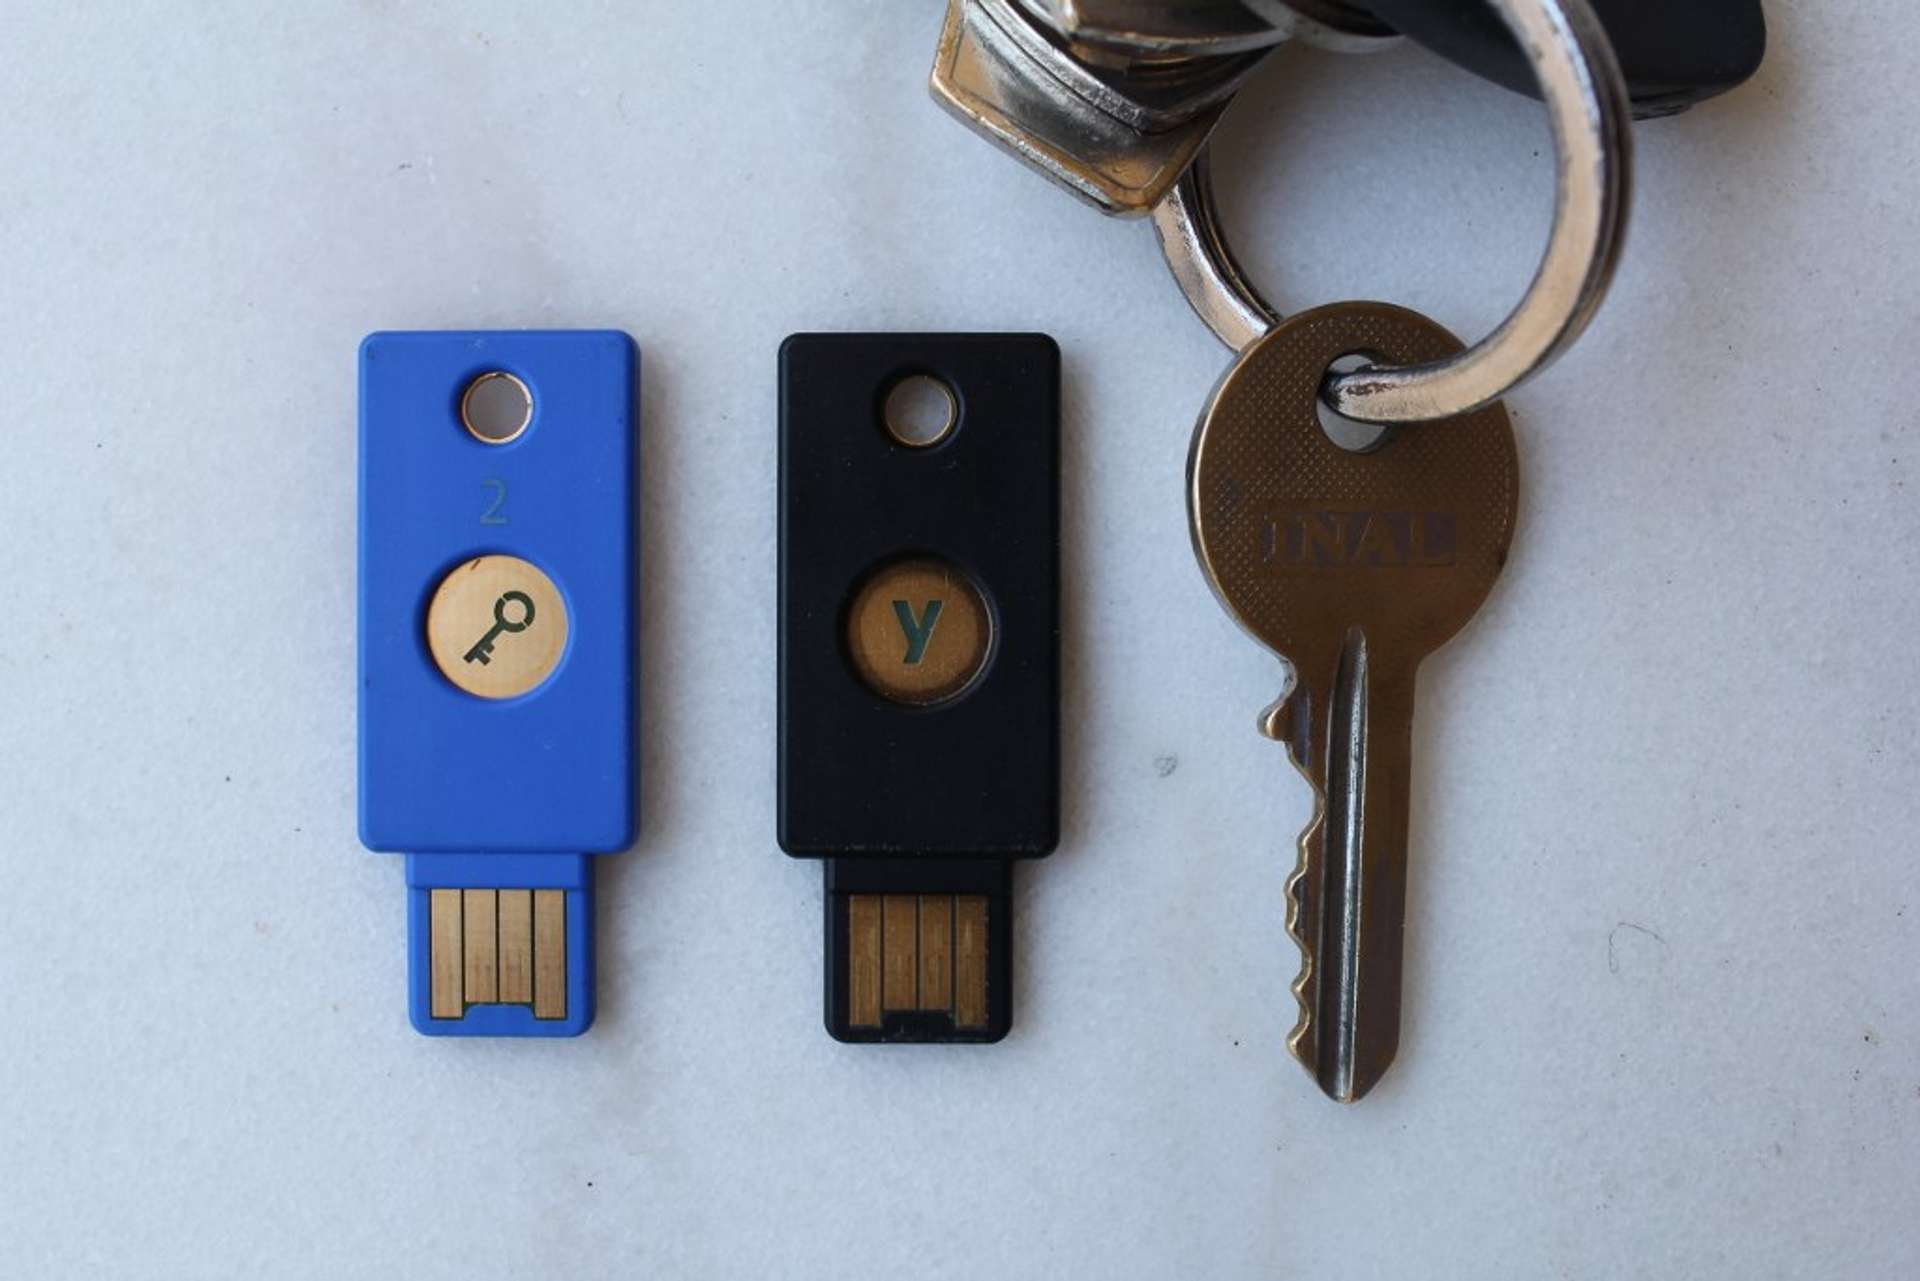 Yubikey size comparison to house key